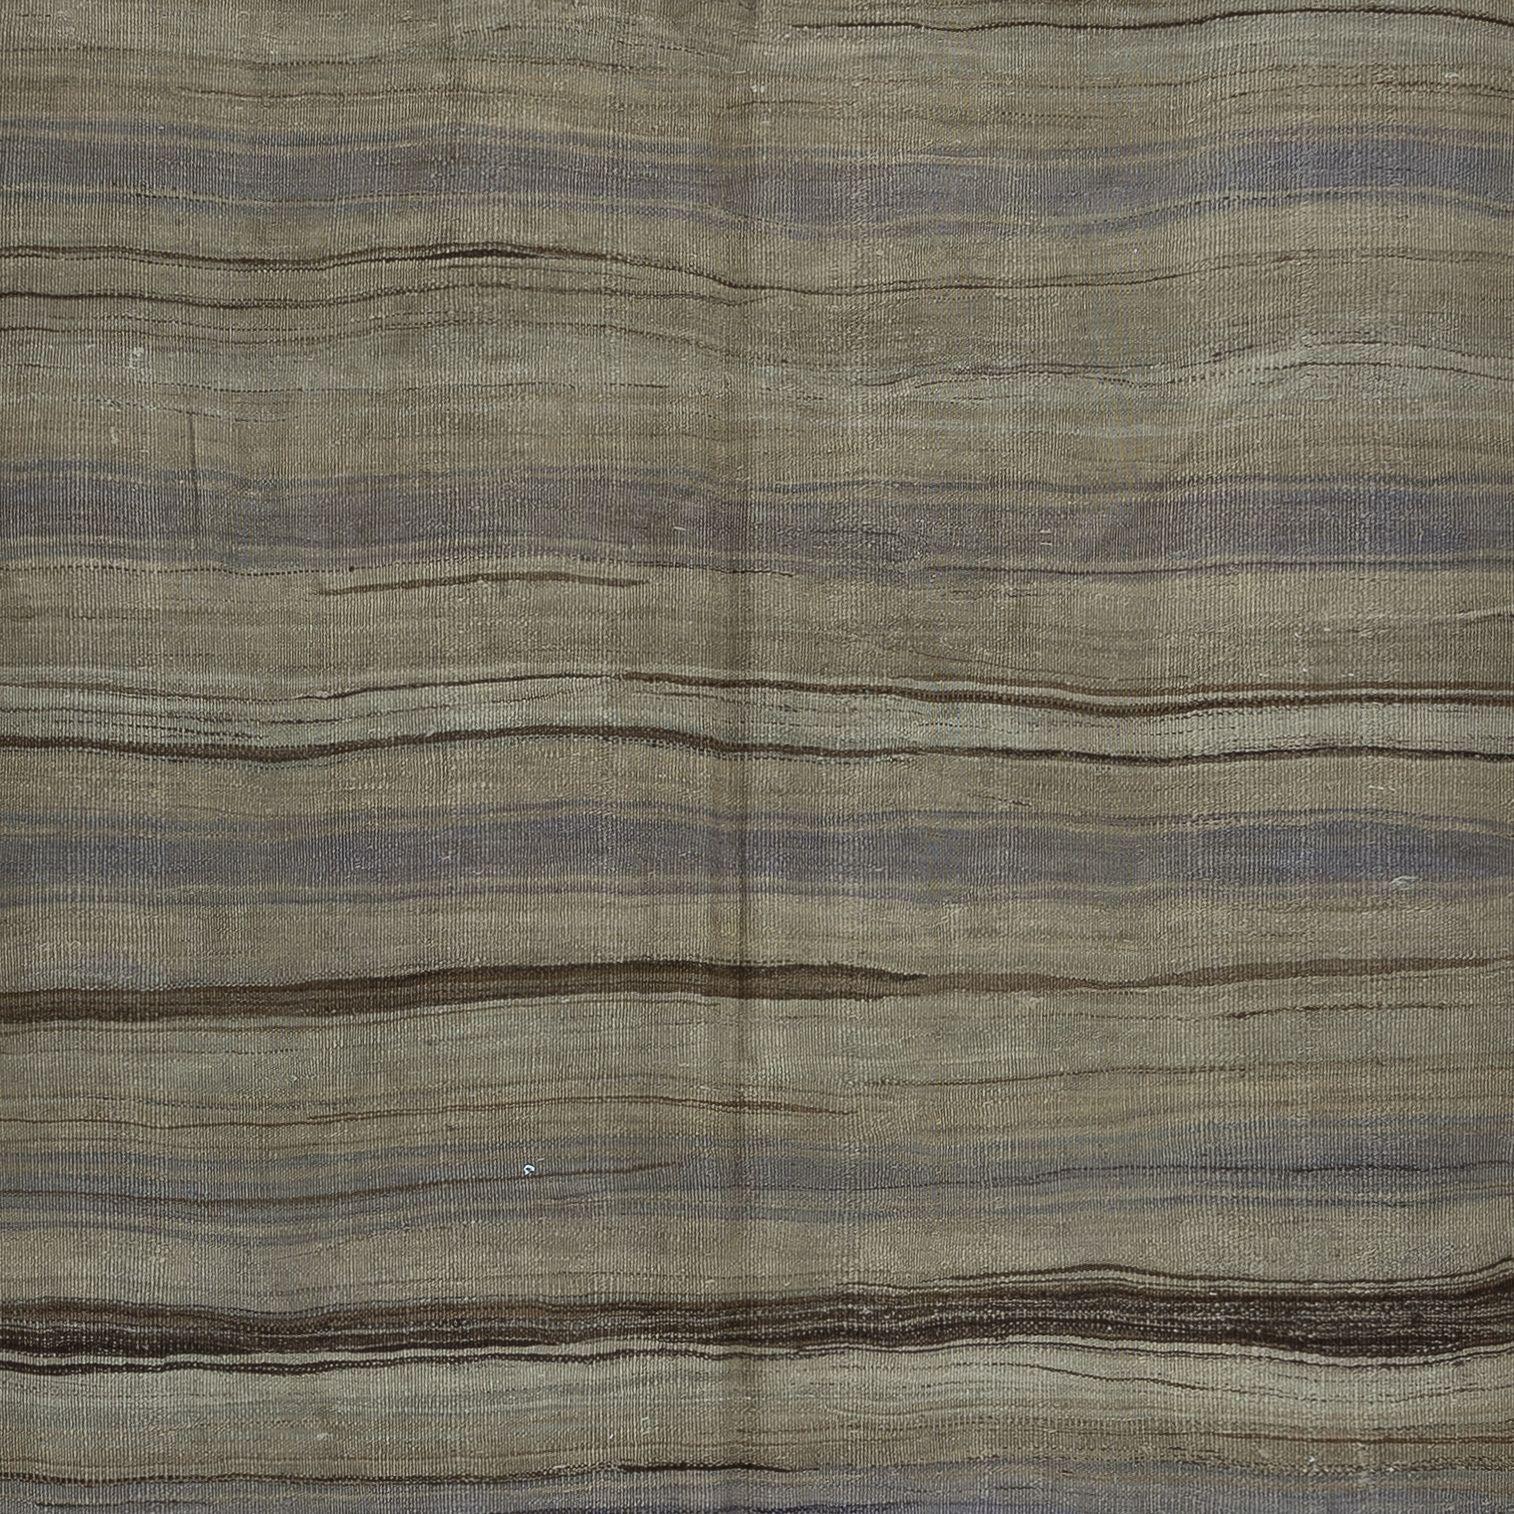 Hand-Woven 4.4x12.2 Ft Flat-Weave Turkish Runner Kilim, Vintage Striped Wool Corridor Rug For Sale